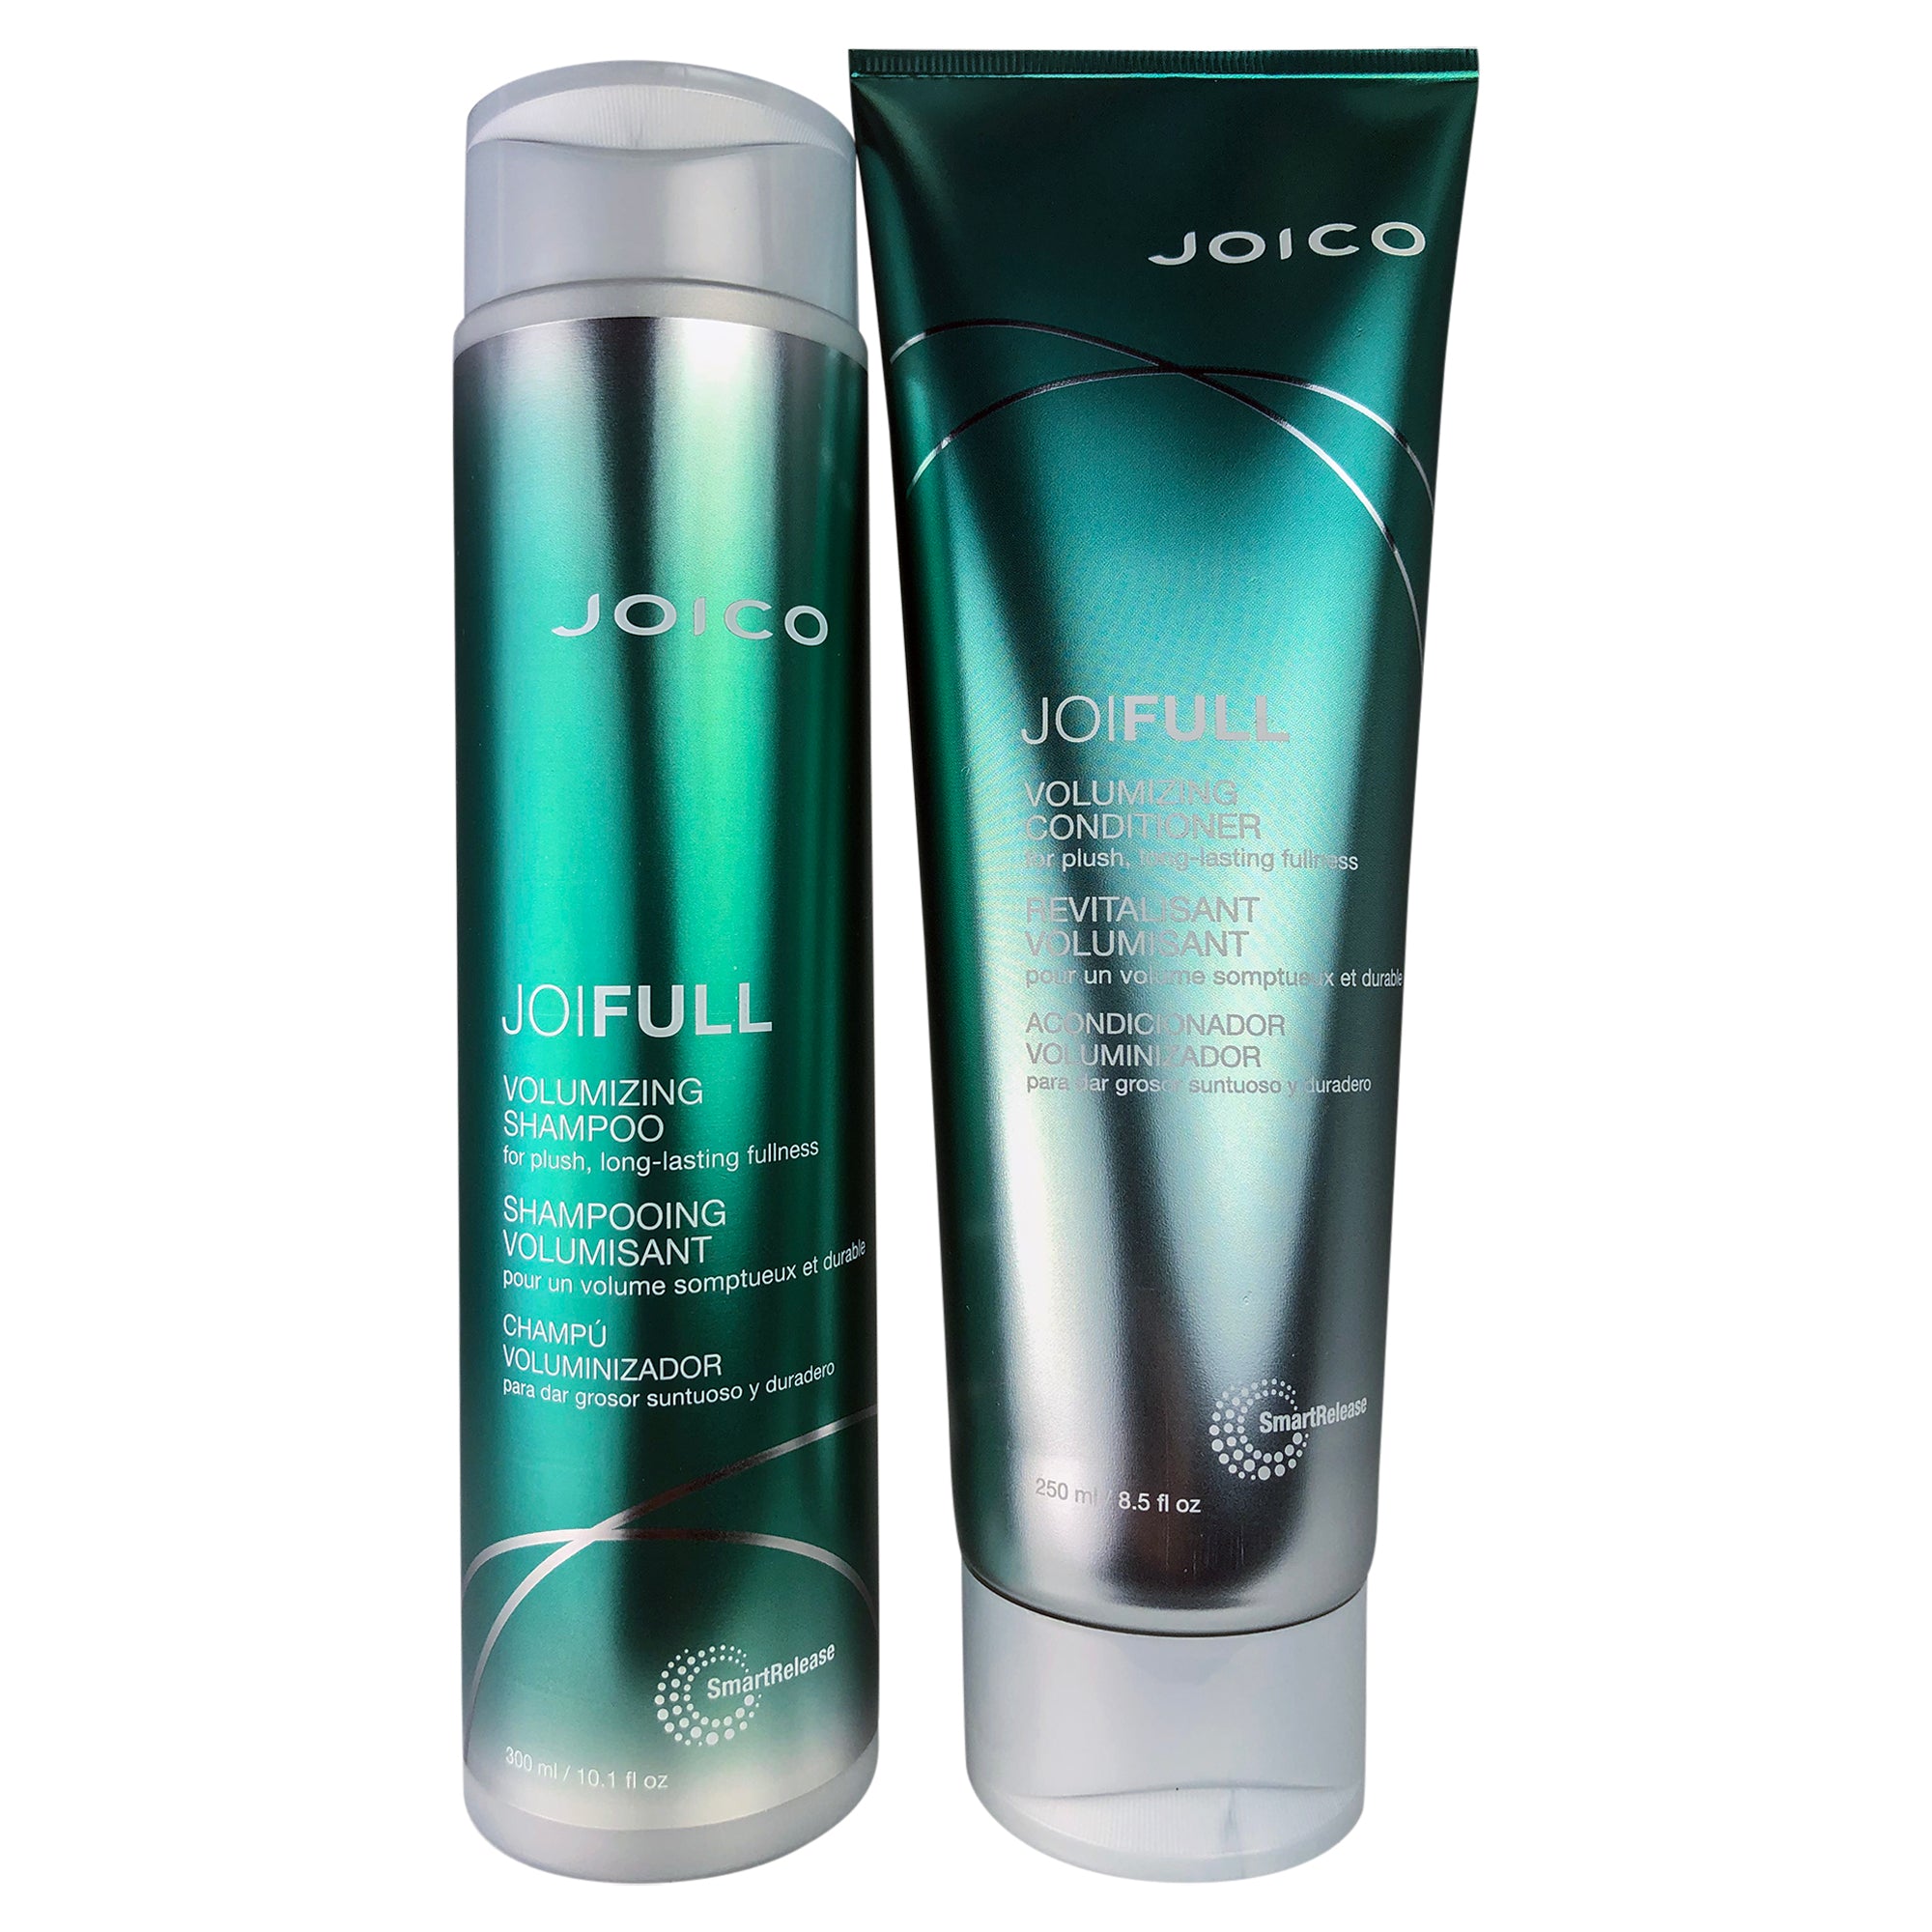 Joico Joifull Volumizing Shampoo & Conditioner DUO 10.1 oz/8.5 oz